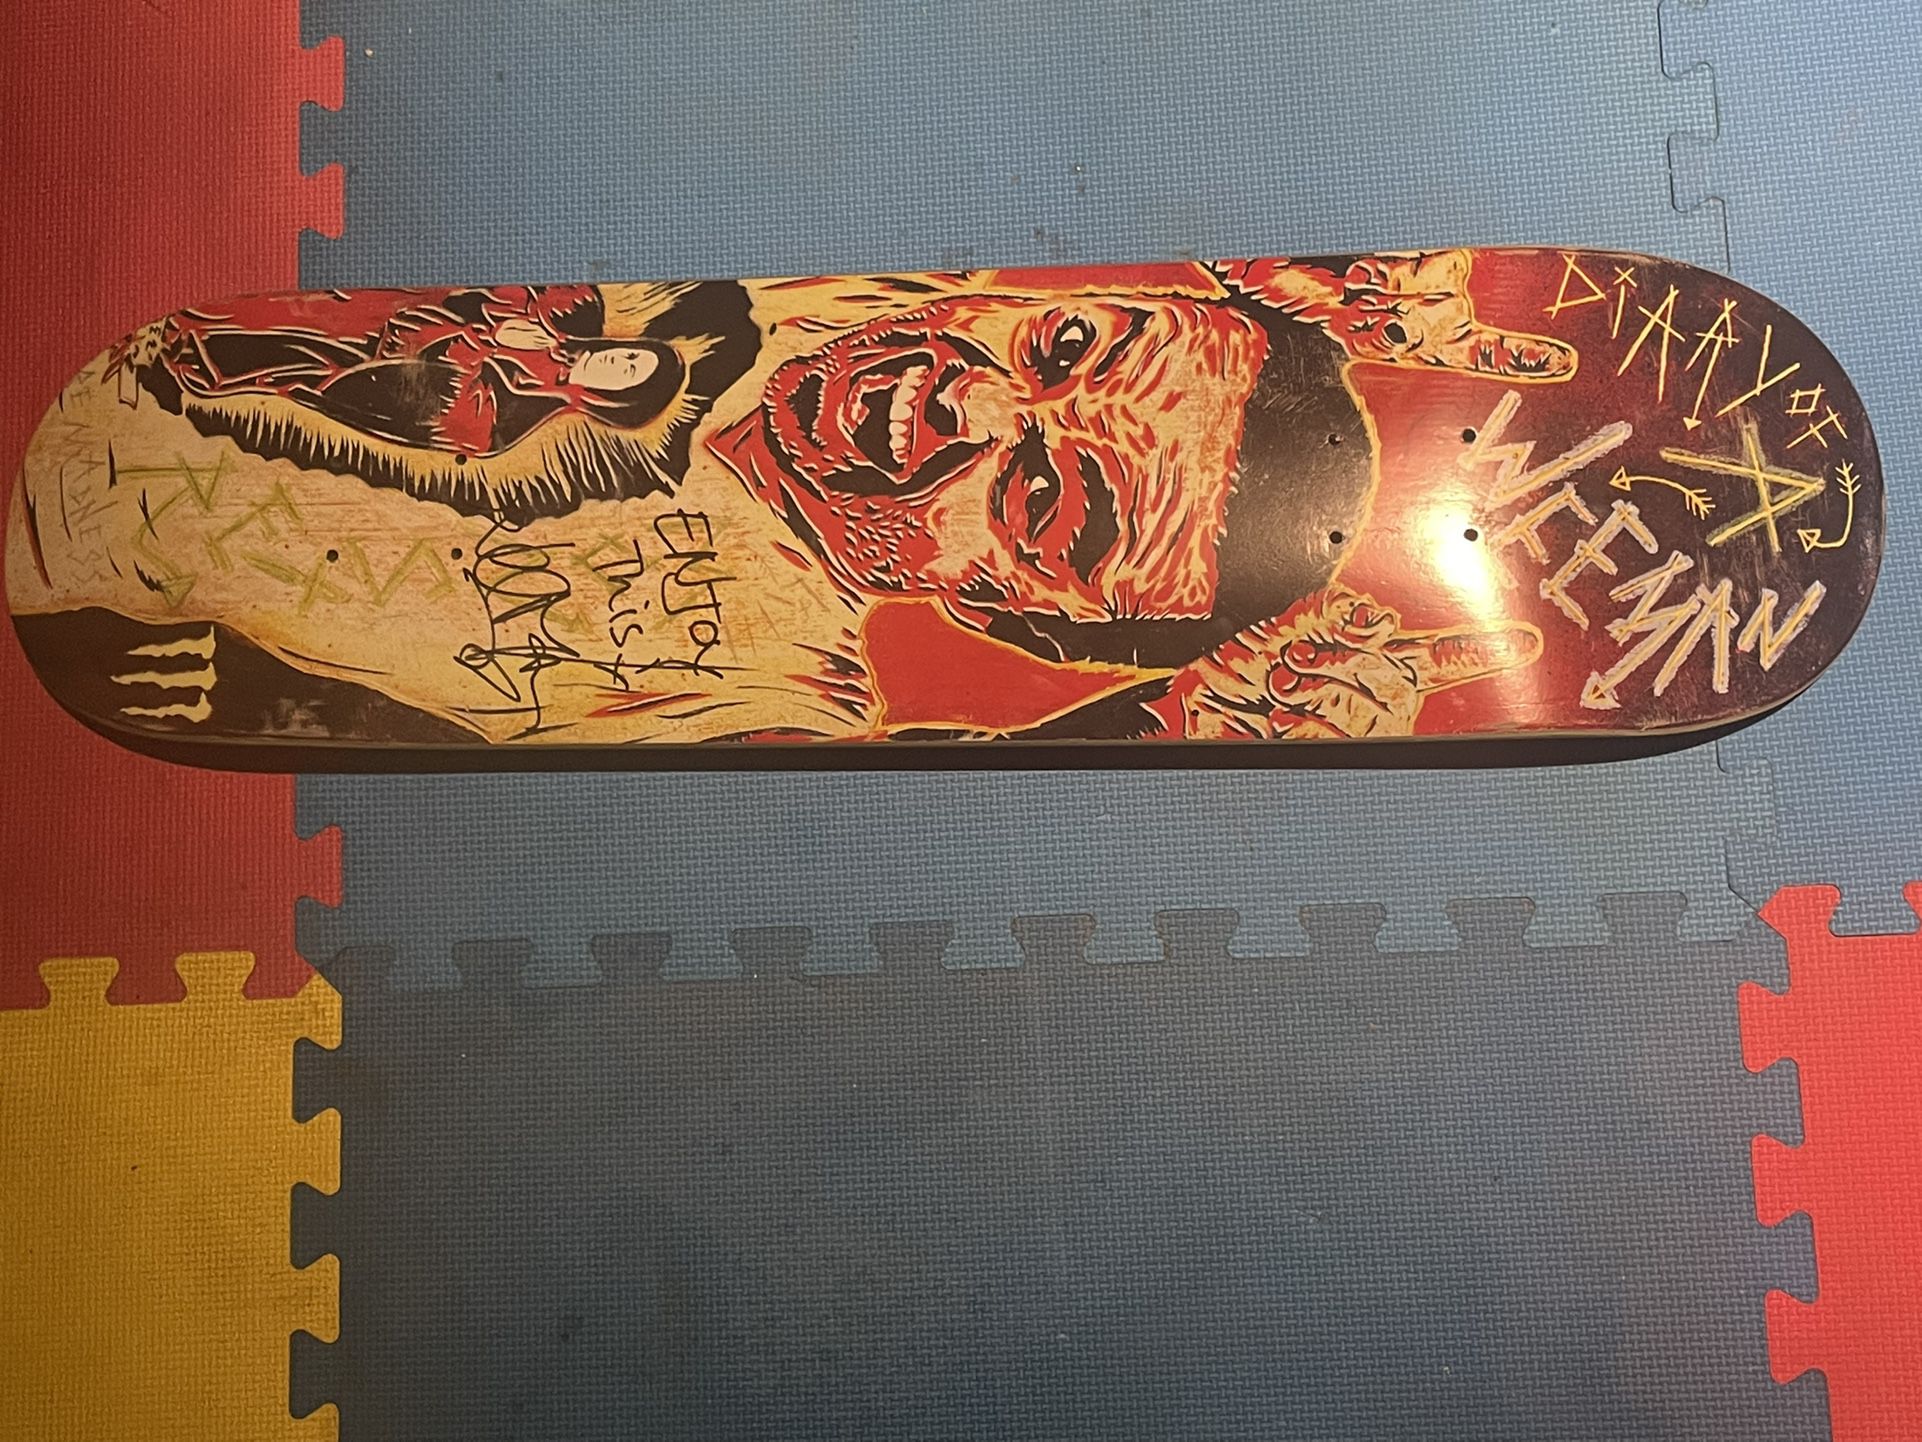 Wee Man Autographed Skateboard JACKASS Jason Acuna for Sale in